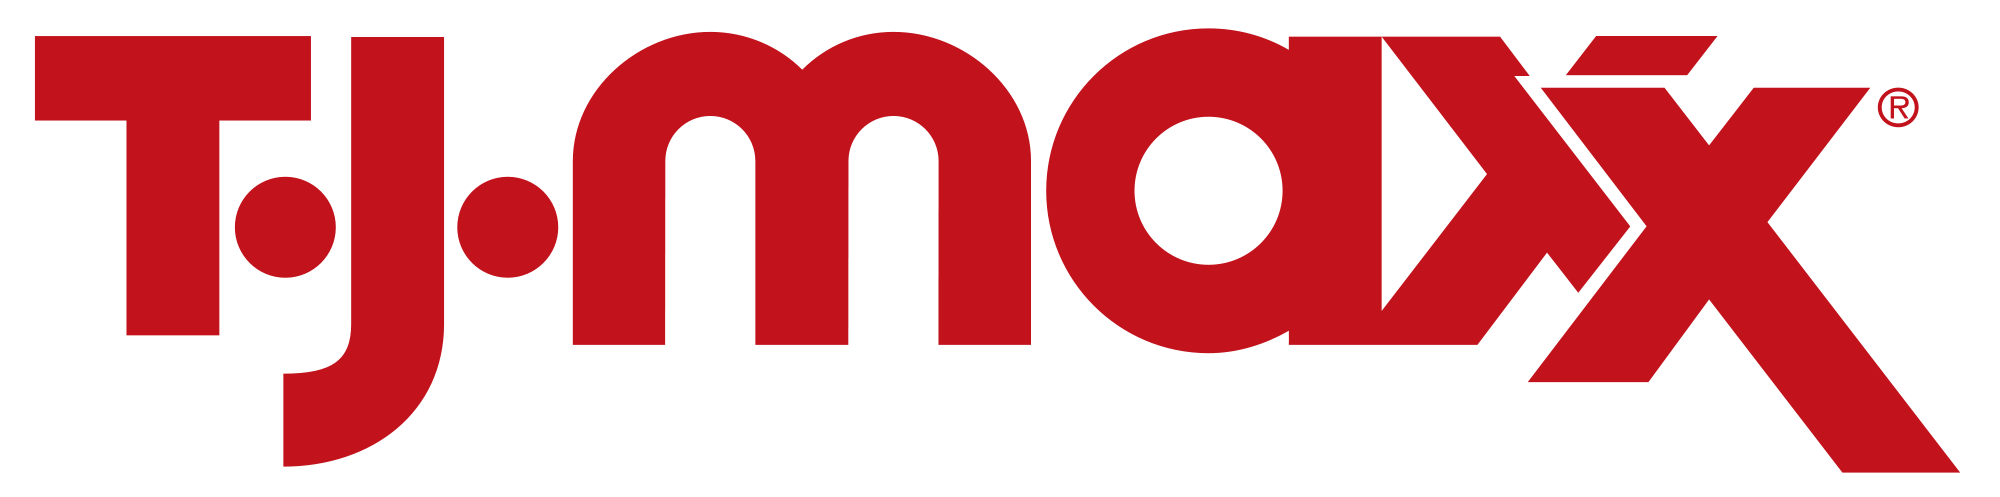 TJ Maxx Brand Logo